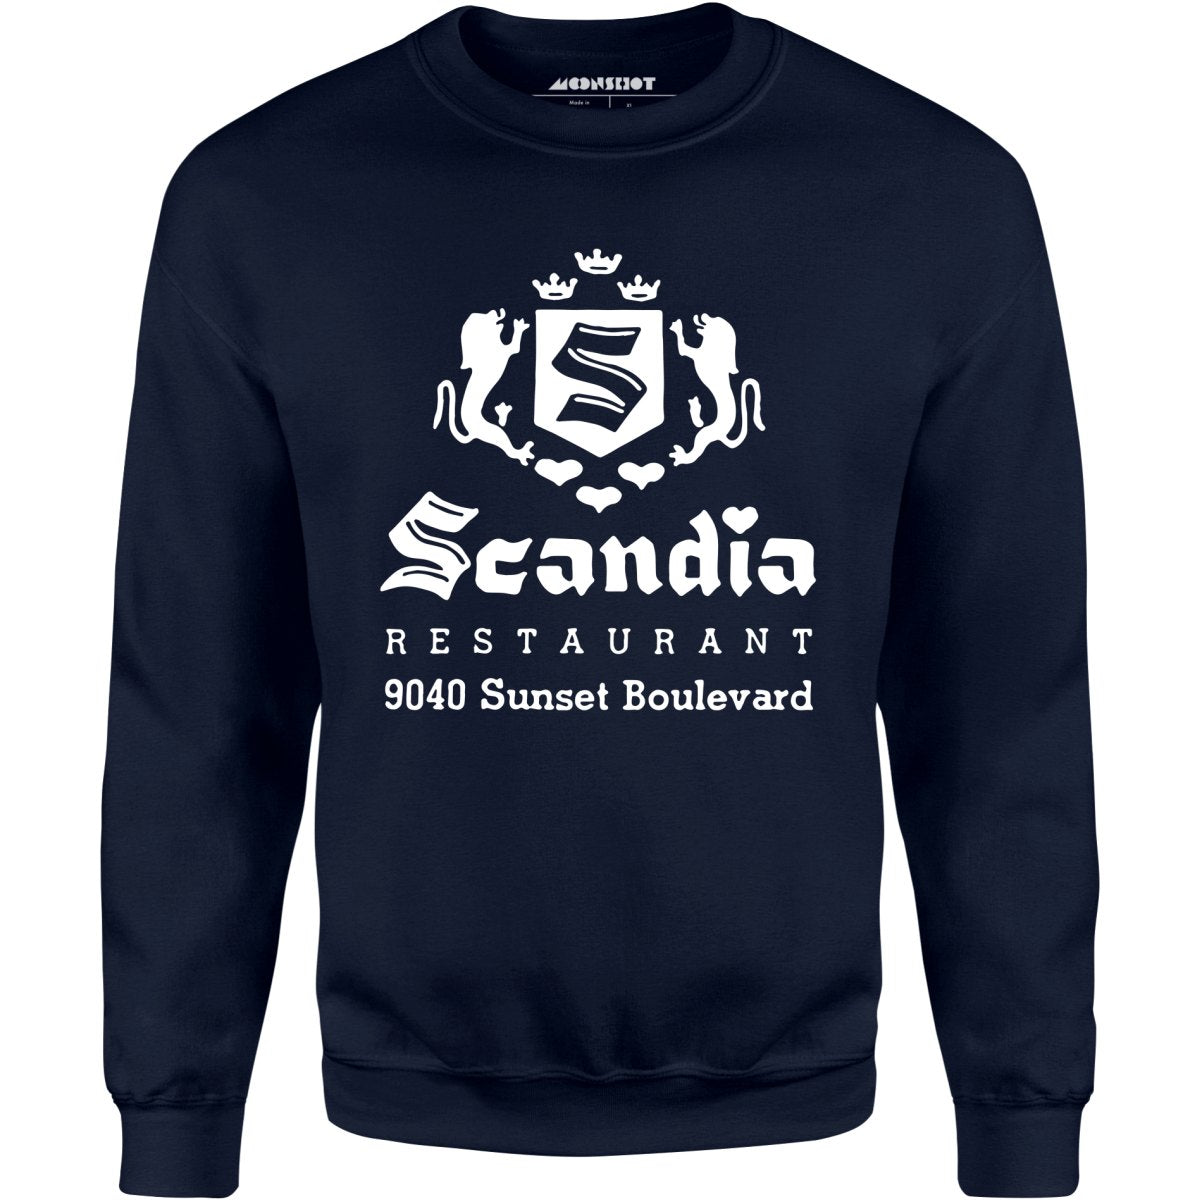 Scandia - West Hollywood, CA - Vintage Restaurant - Unisex Sweatshirt